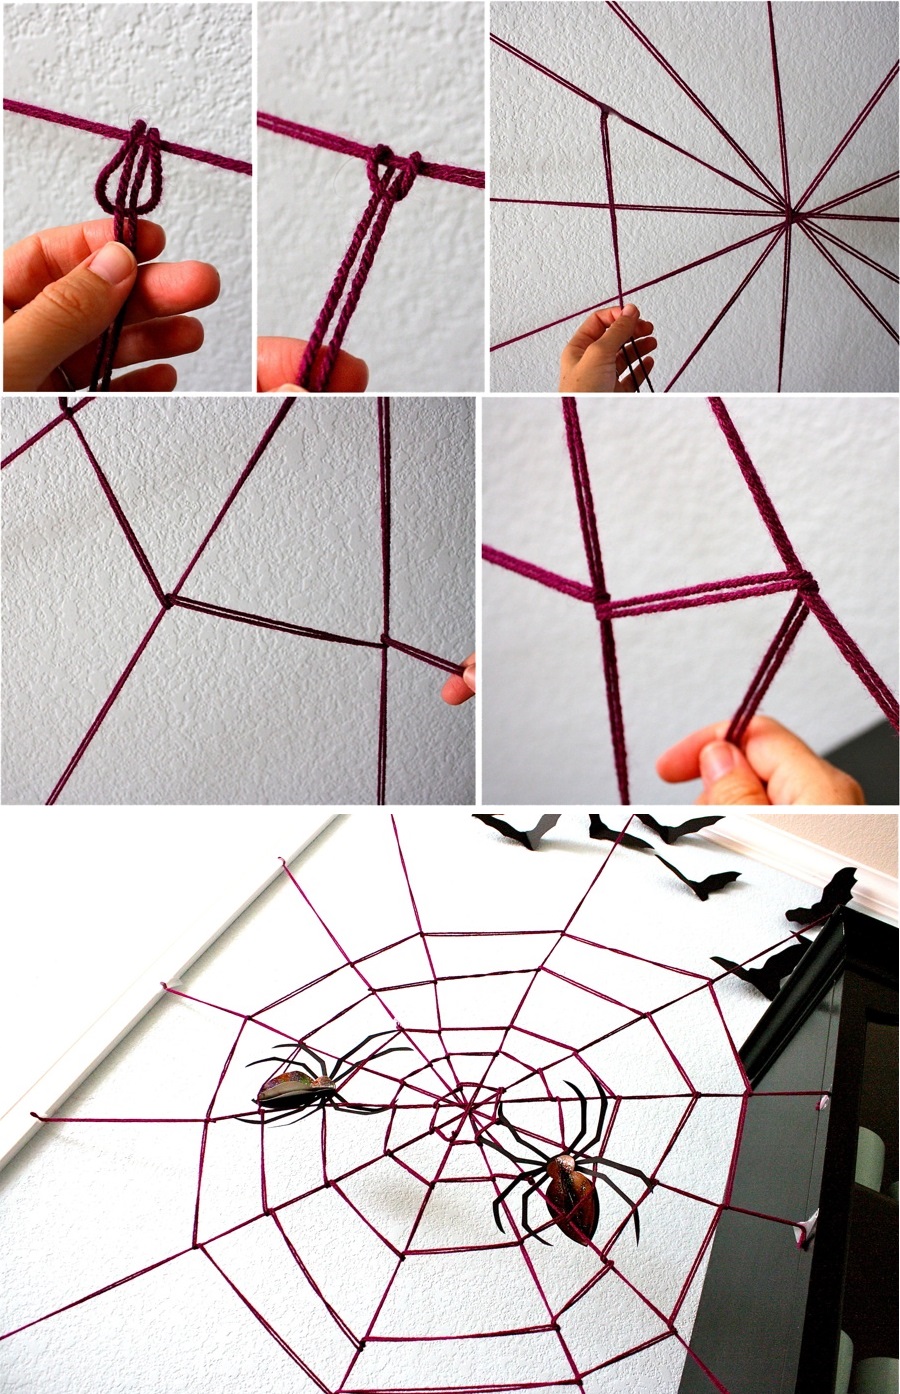 Creating the DIY yarn spider web